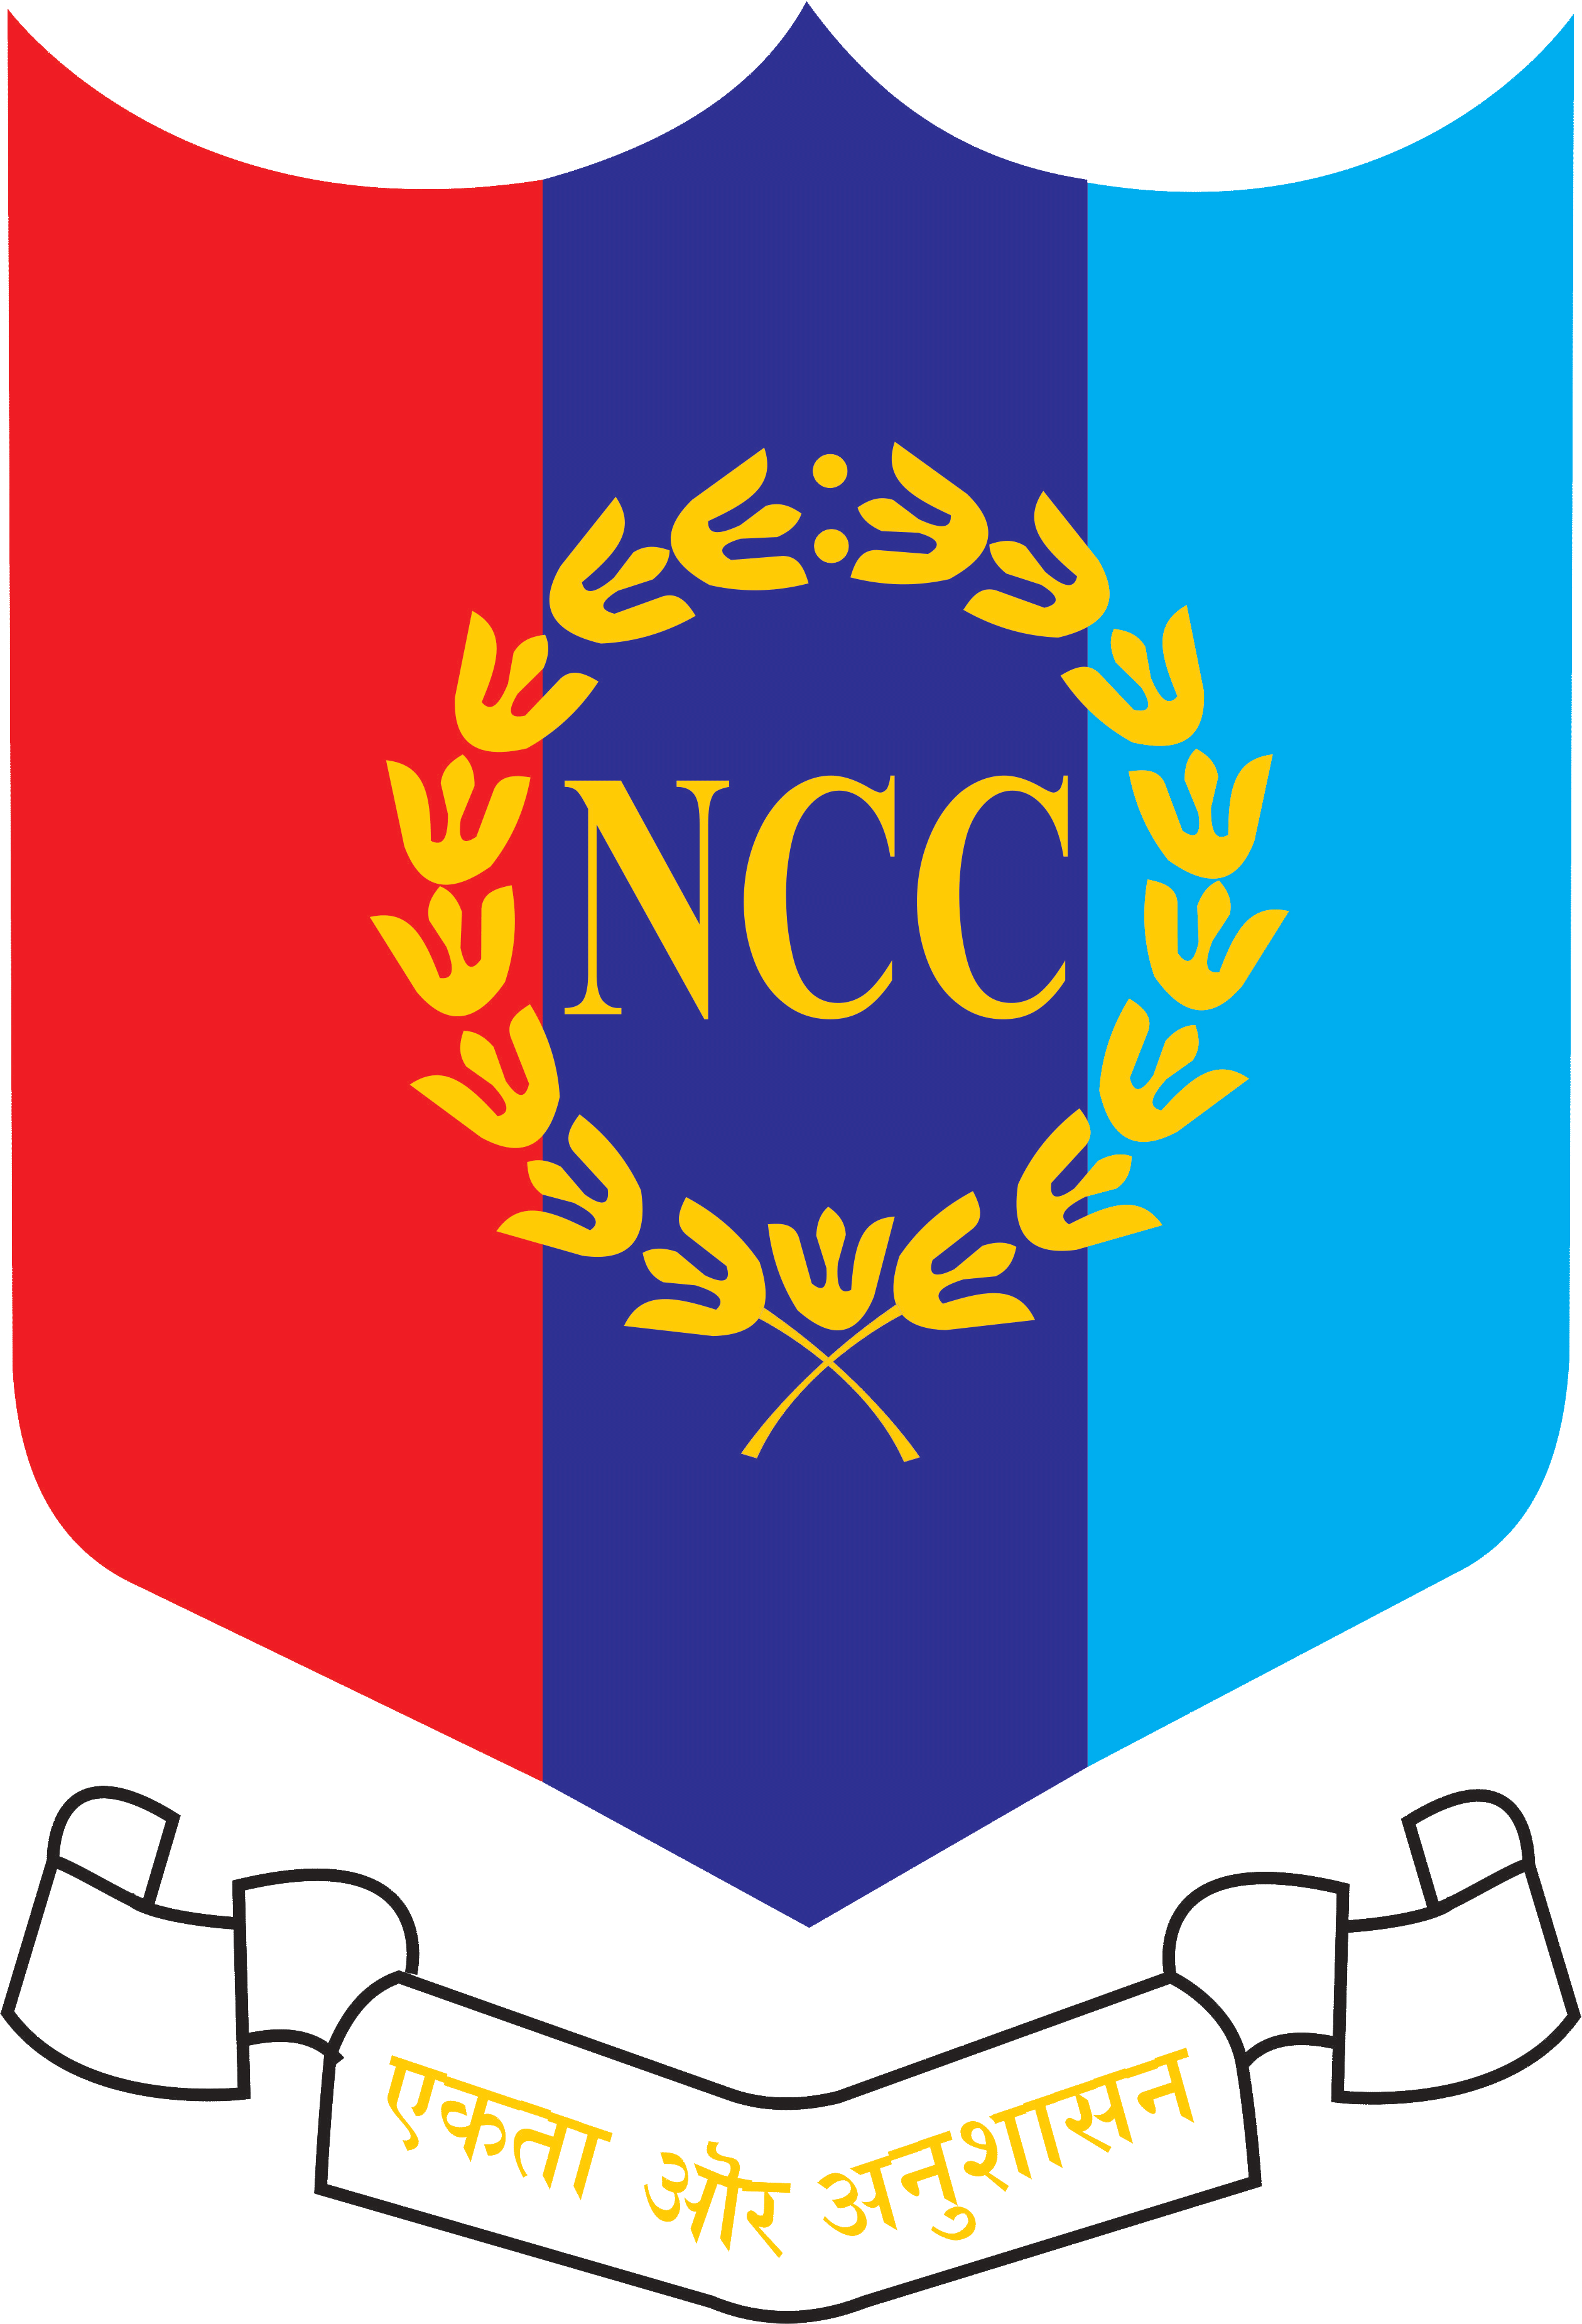  NCC Website